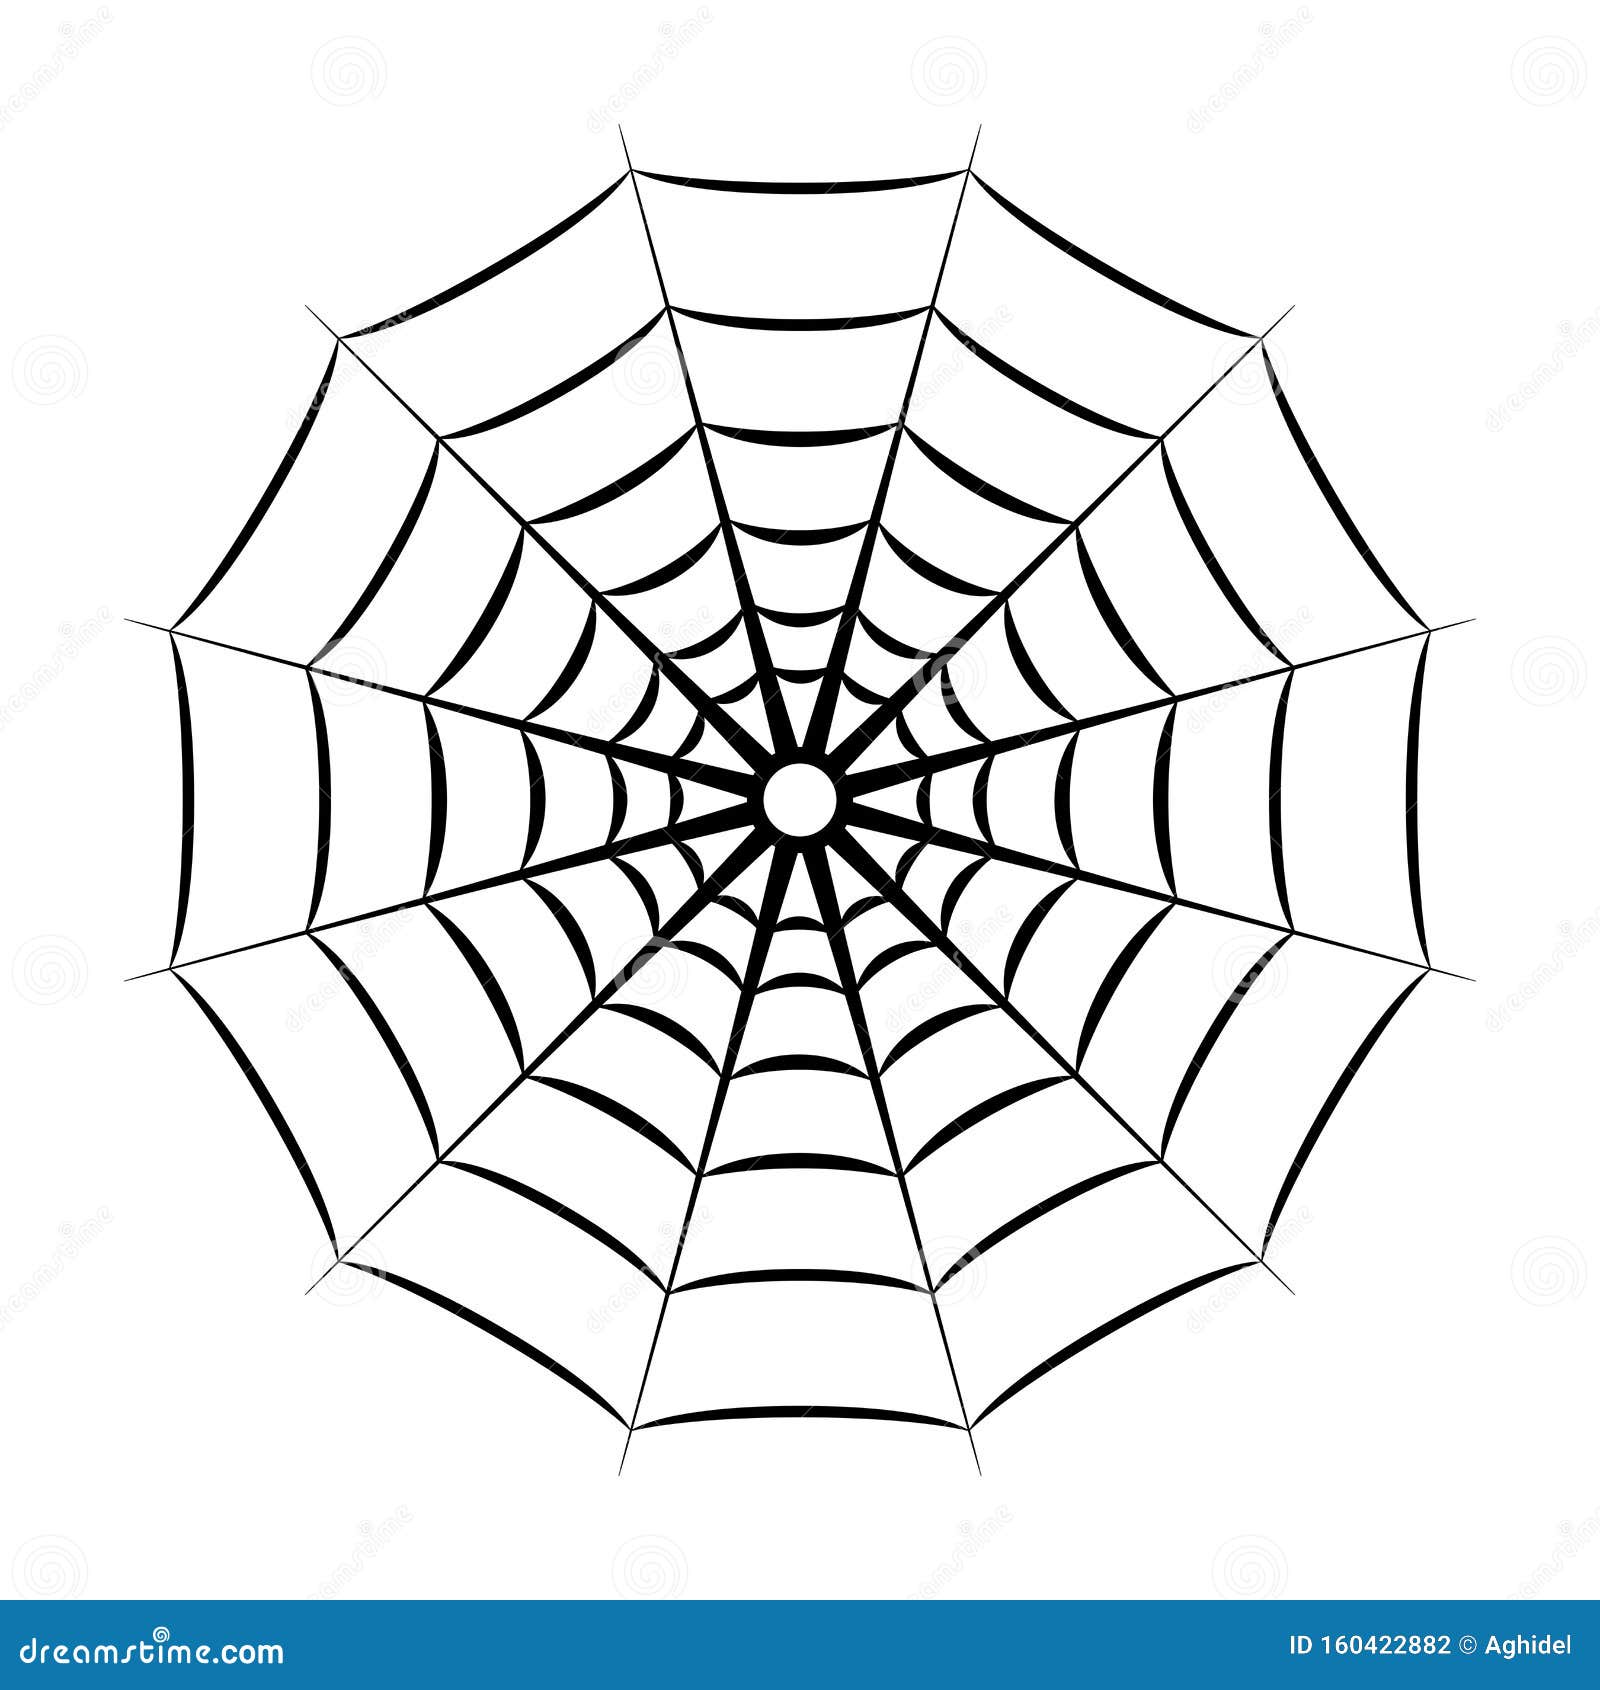 Carding Dark Web